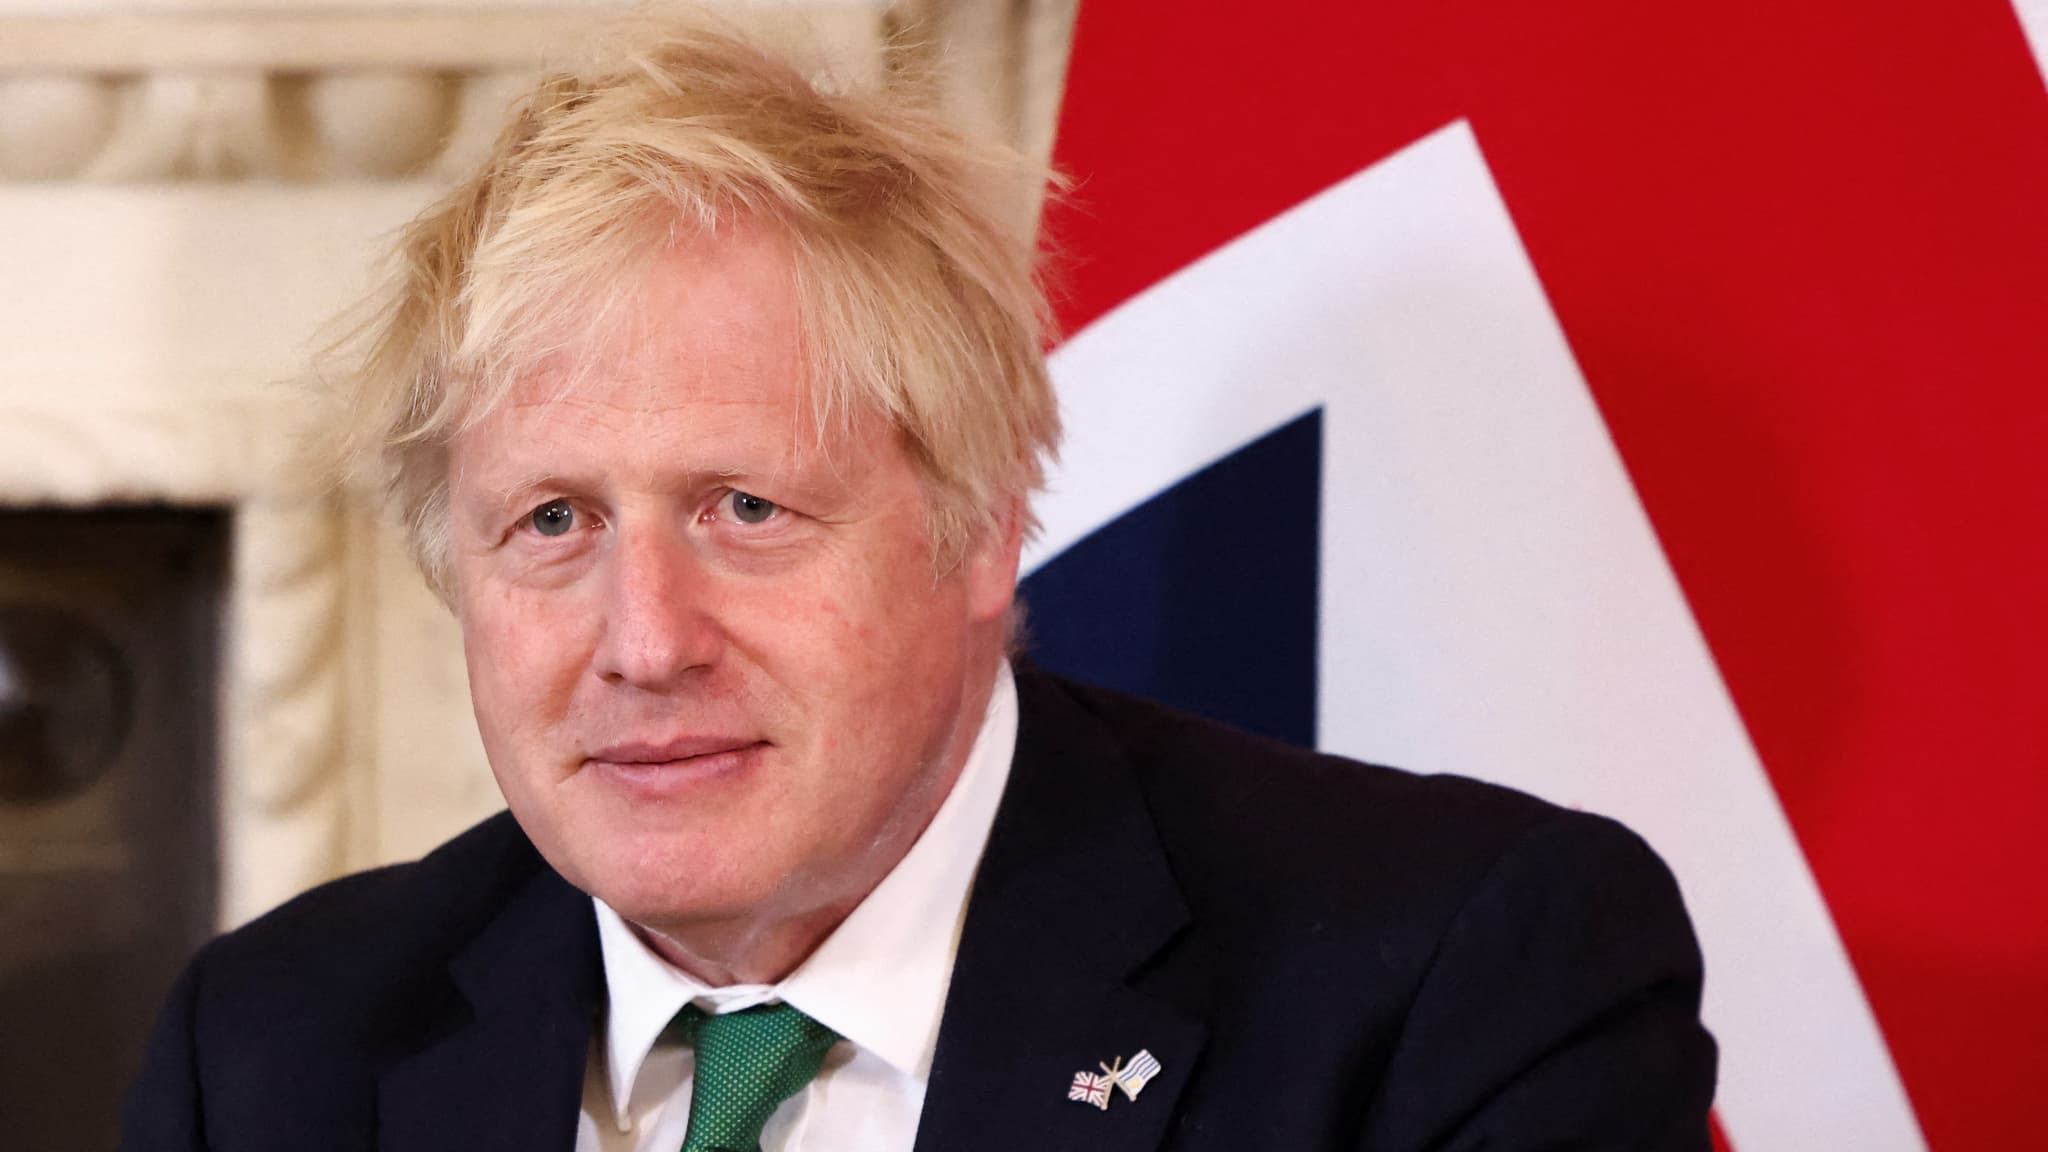 Former British Prime Minister Boris Johnson has announced his resignation as an MP